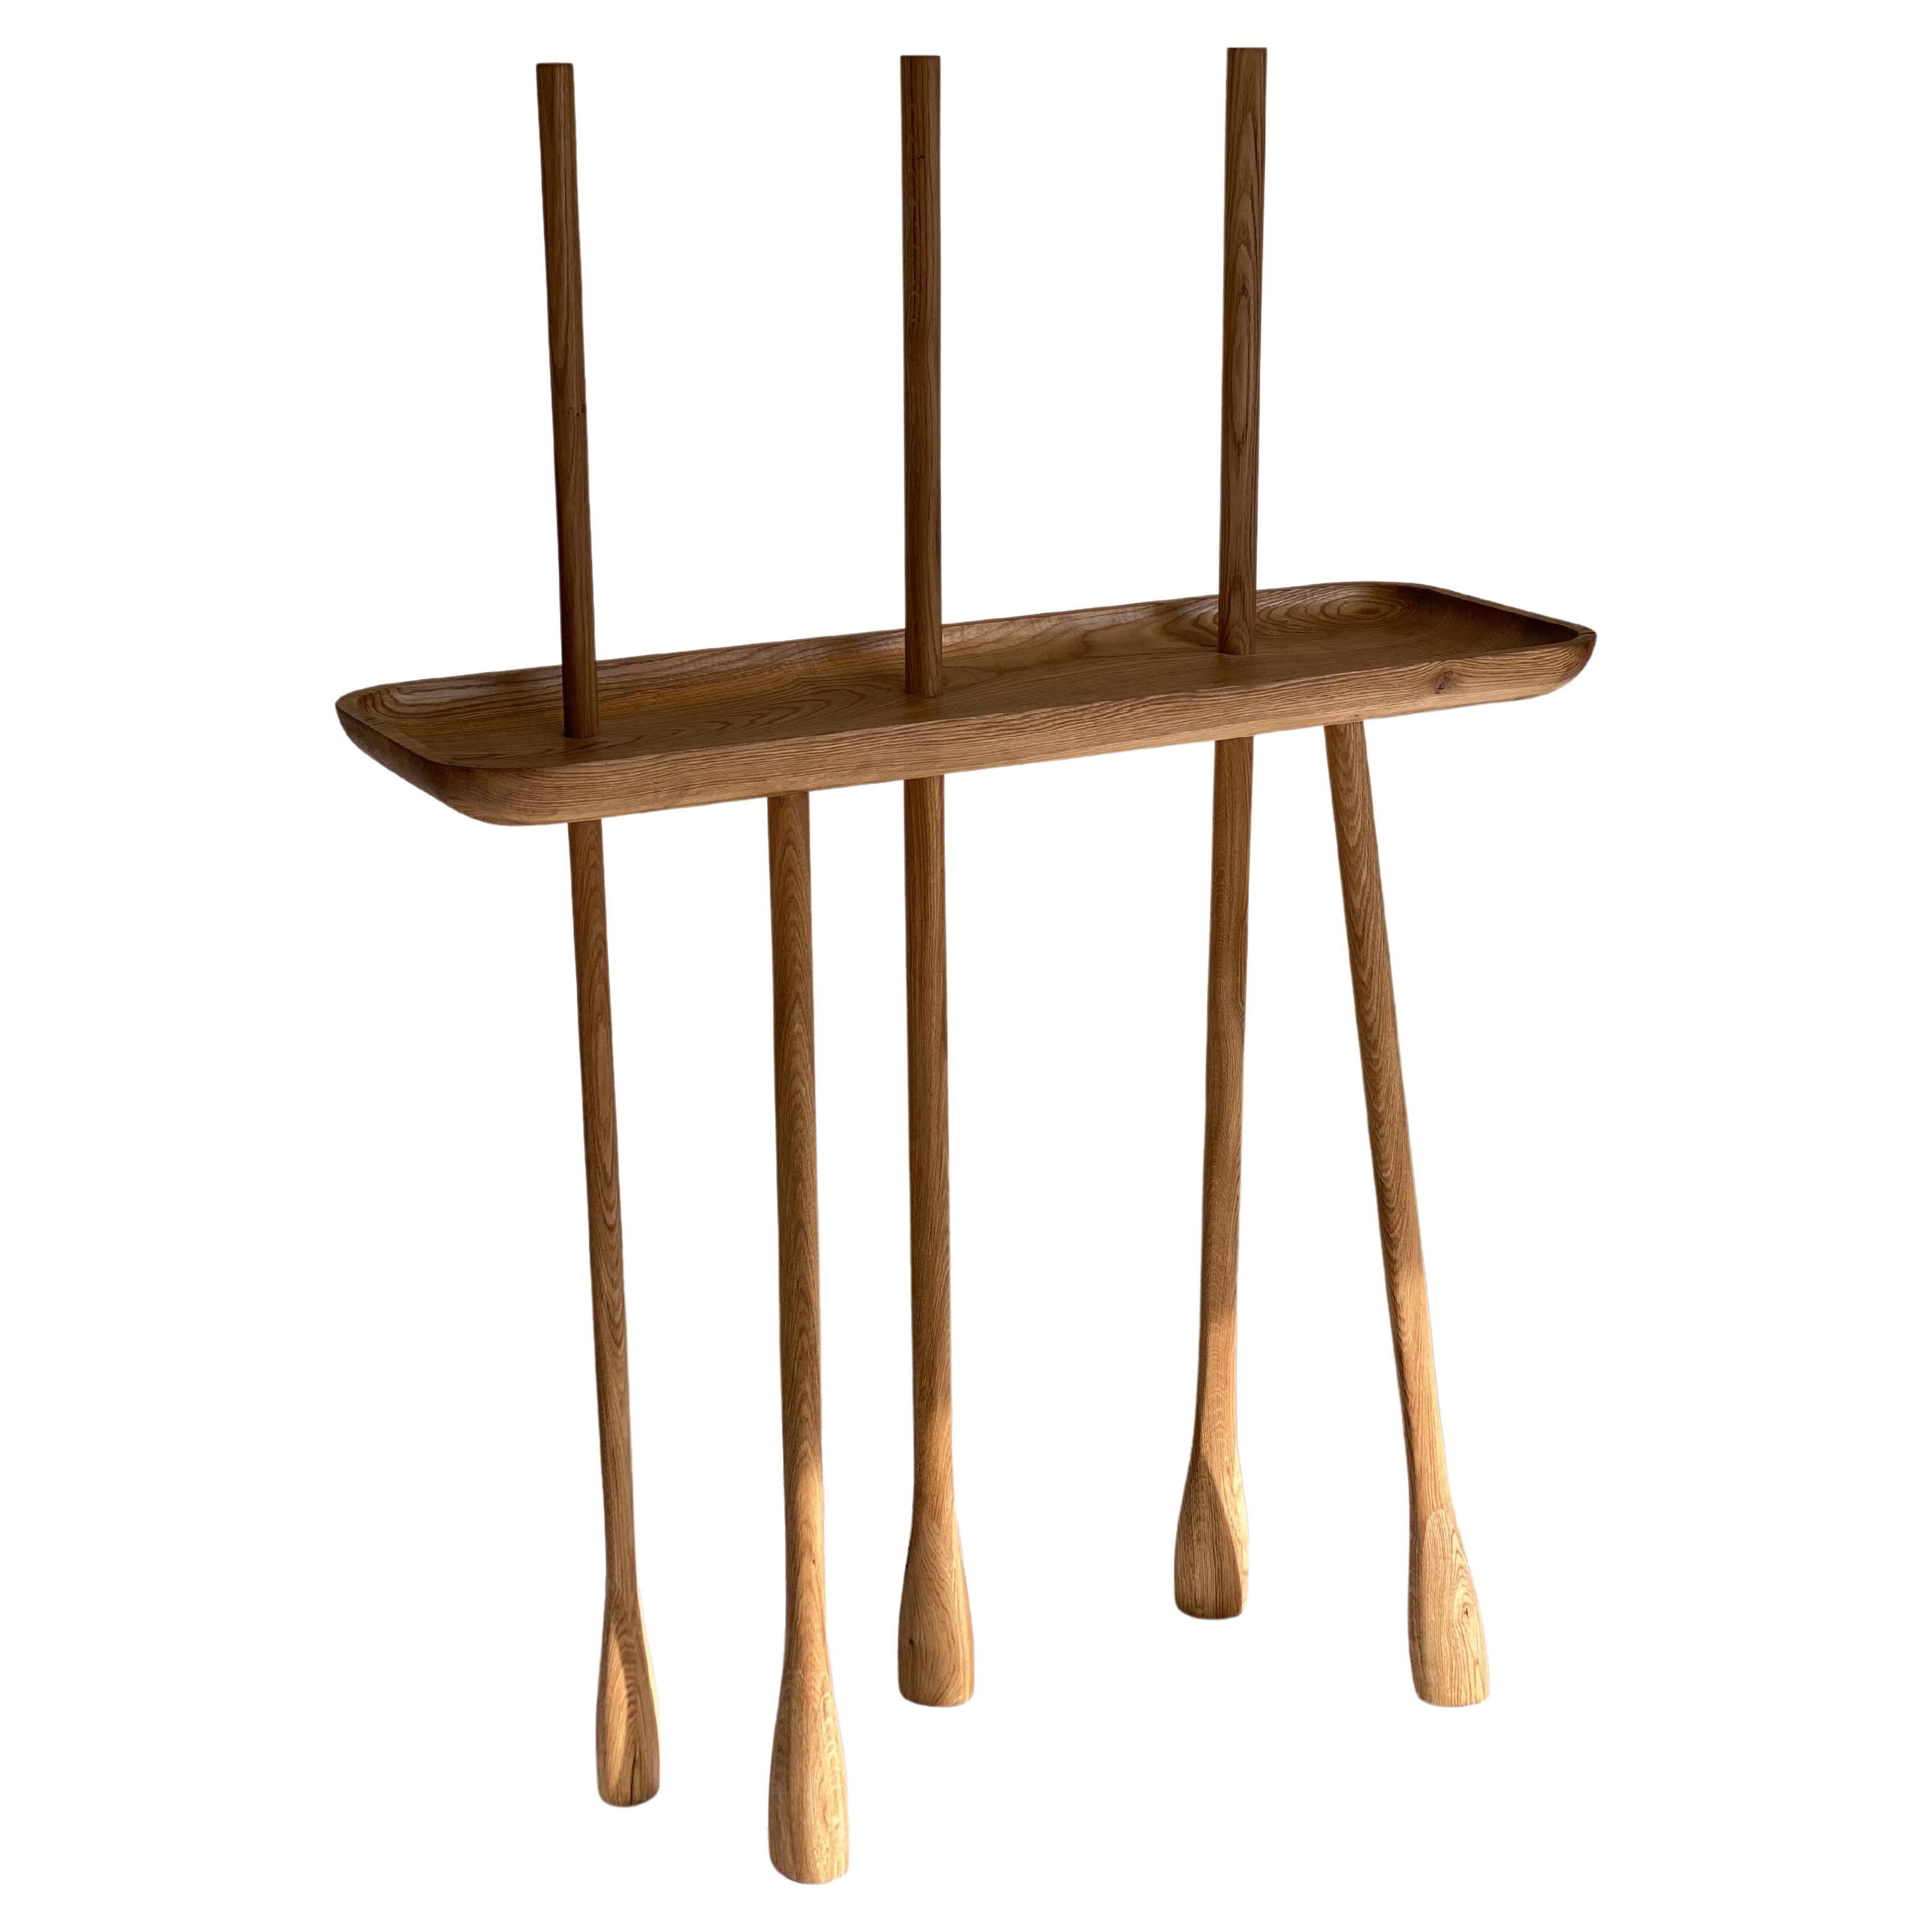 Table console contemporaine minimaliste en bois Charlotte by Olga Engel en vente